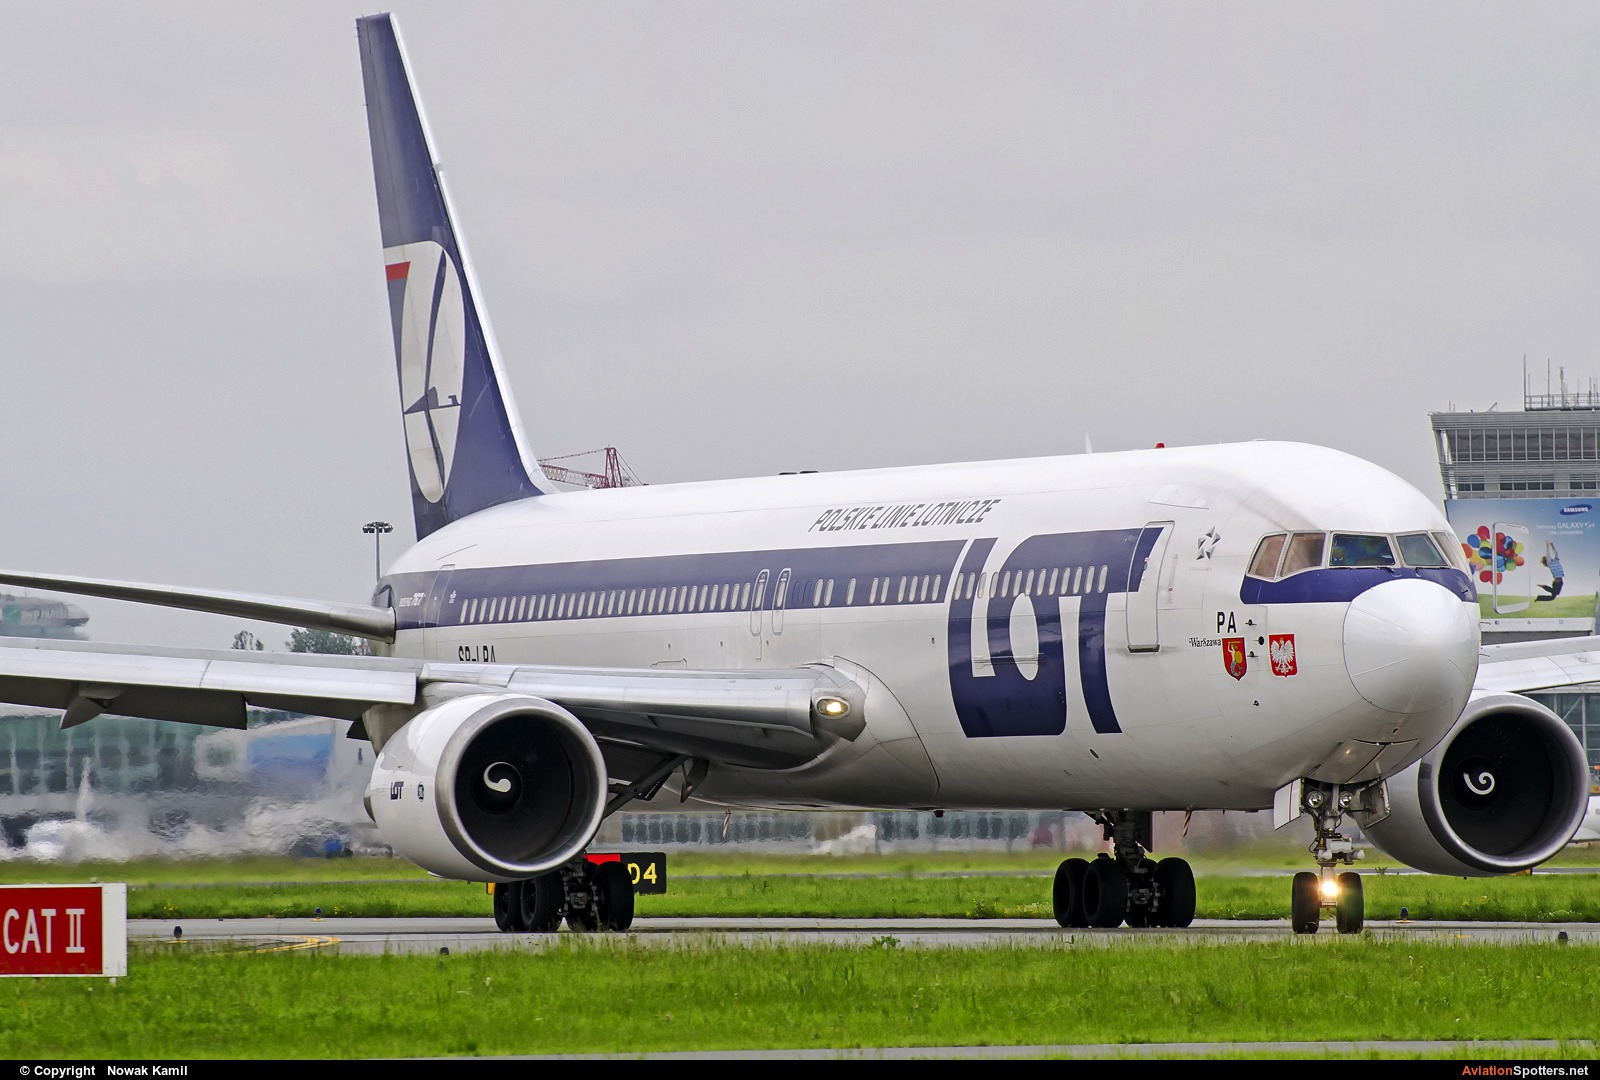 LOT - Polish Airlines  -  767-300ER  (SP-LPA) By Nowak Kamil (kretek)